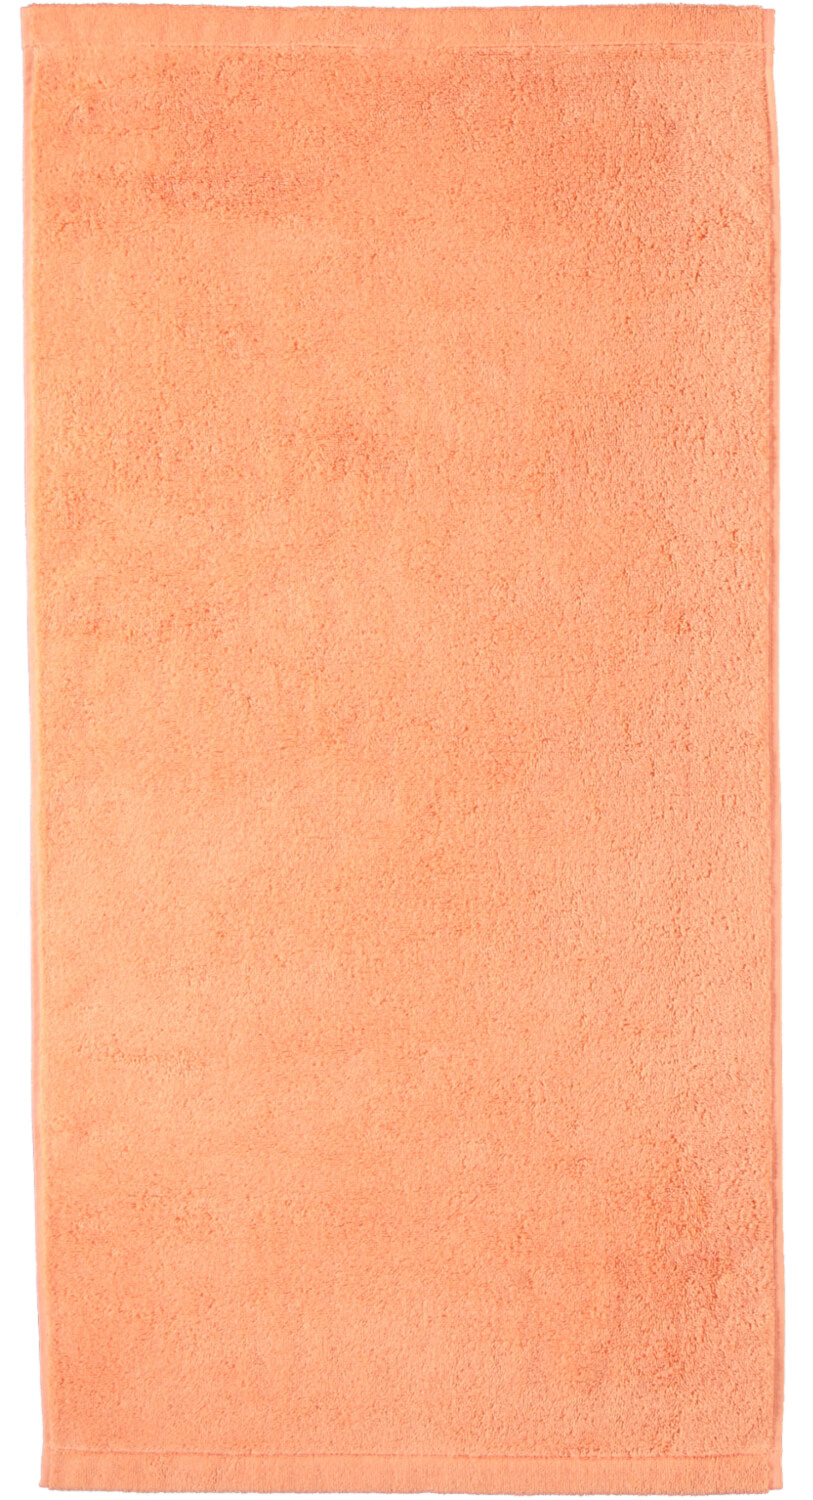 Однотонное полотенце Lifestyle Peach ☞ Размер: 50 x 100 см